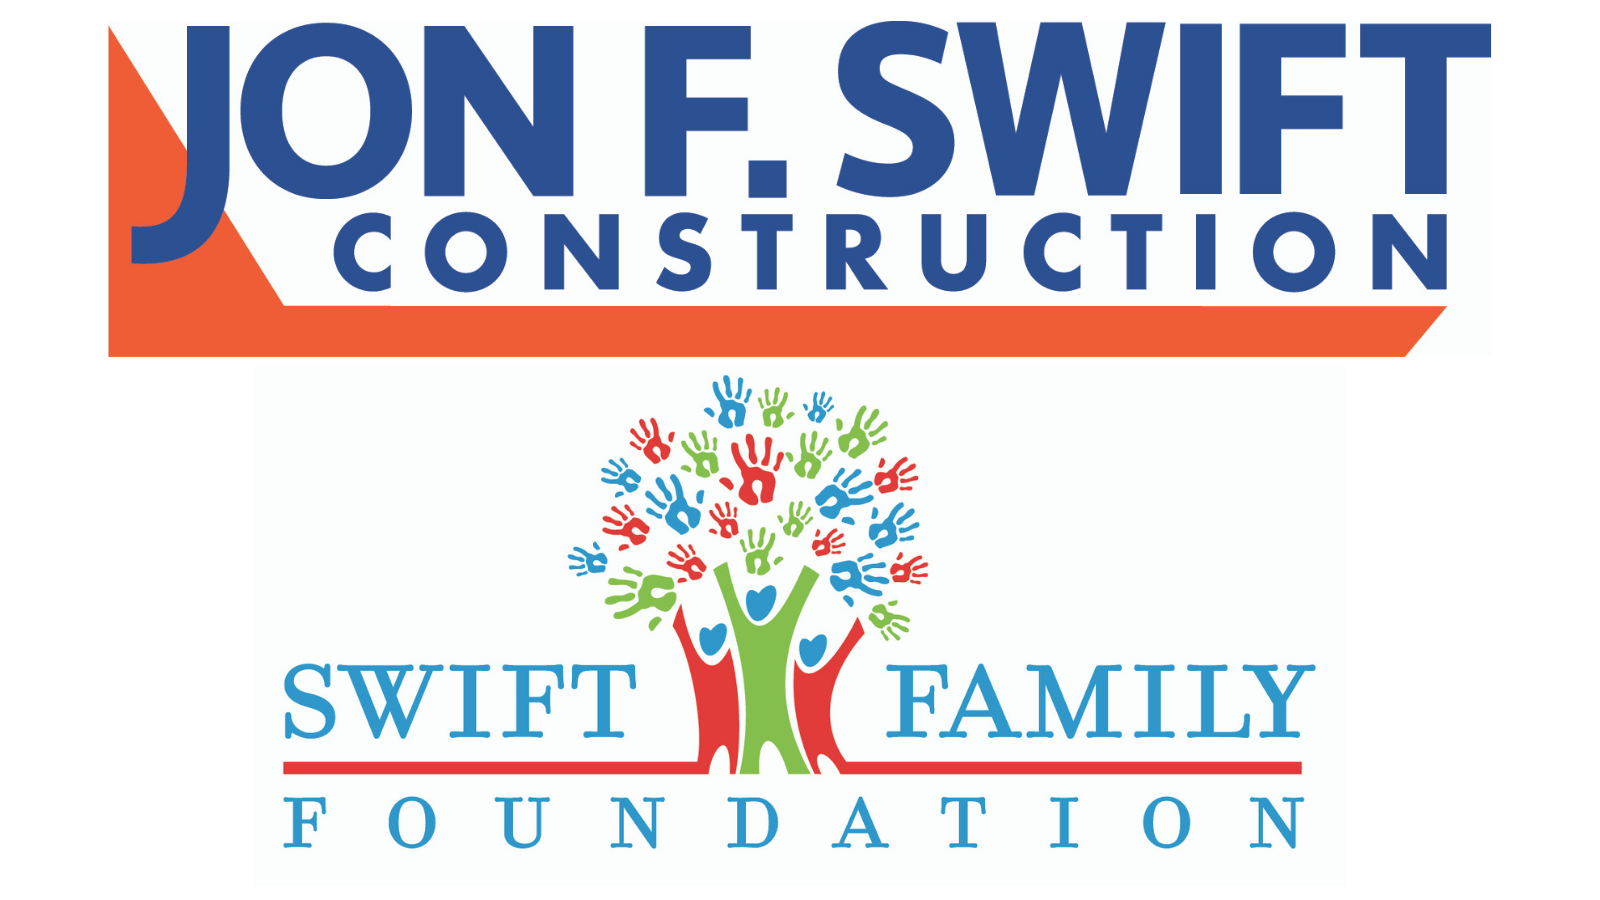 Jon F. Swift Construction and the Swift Family Foundation